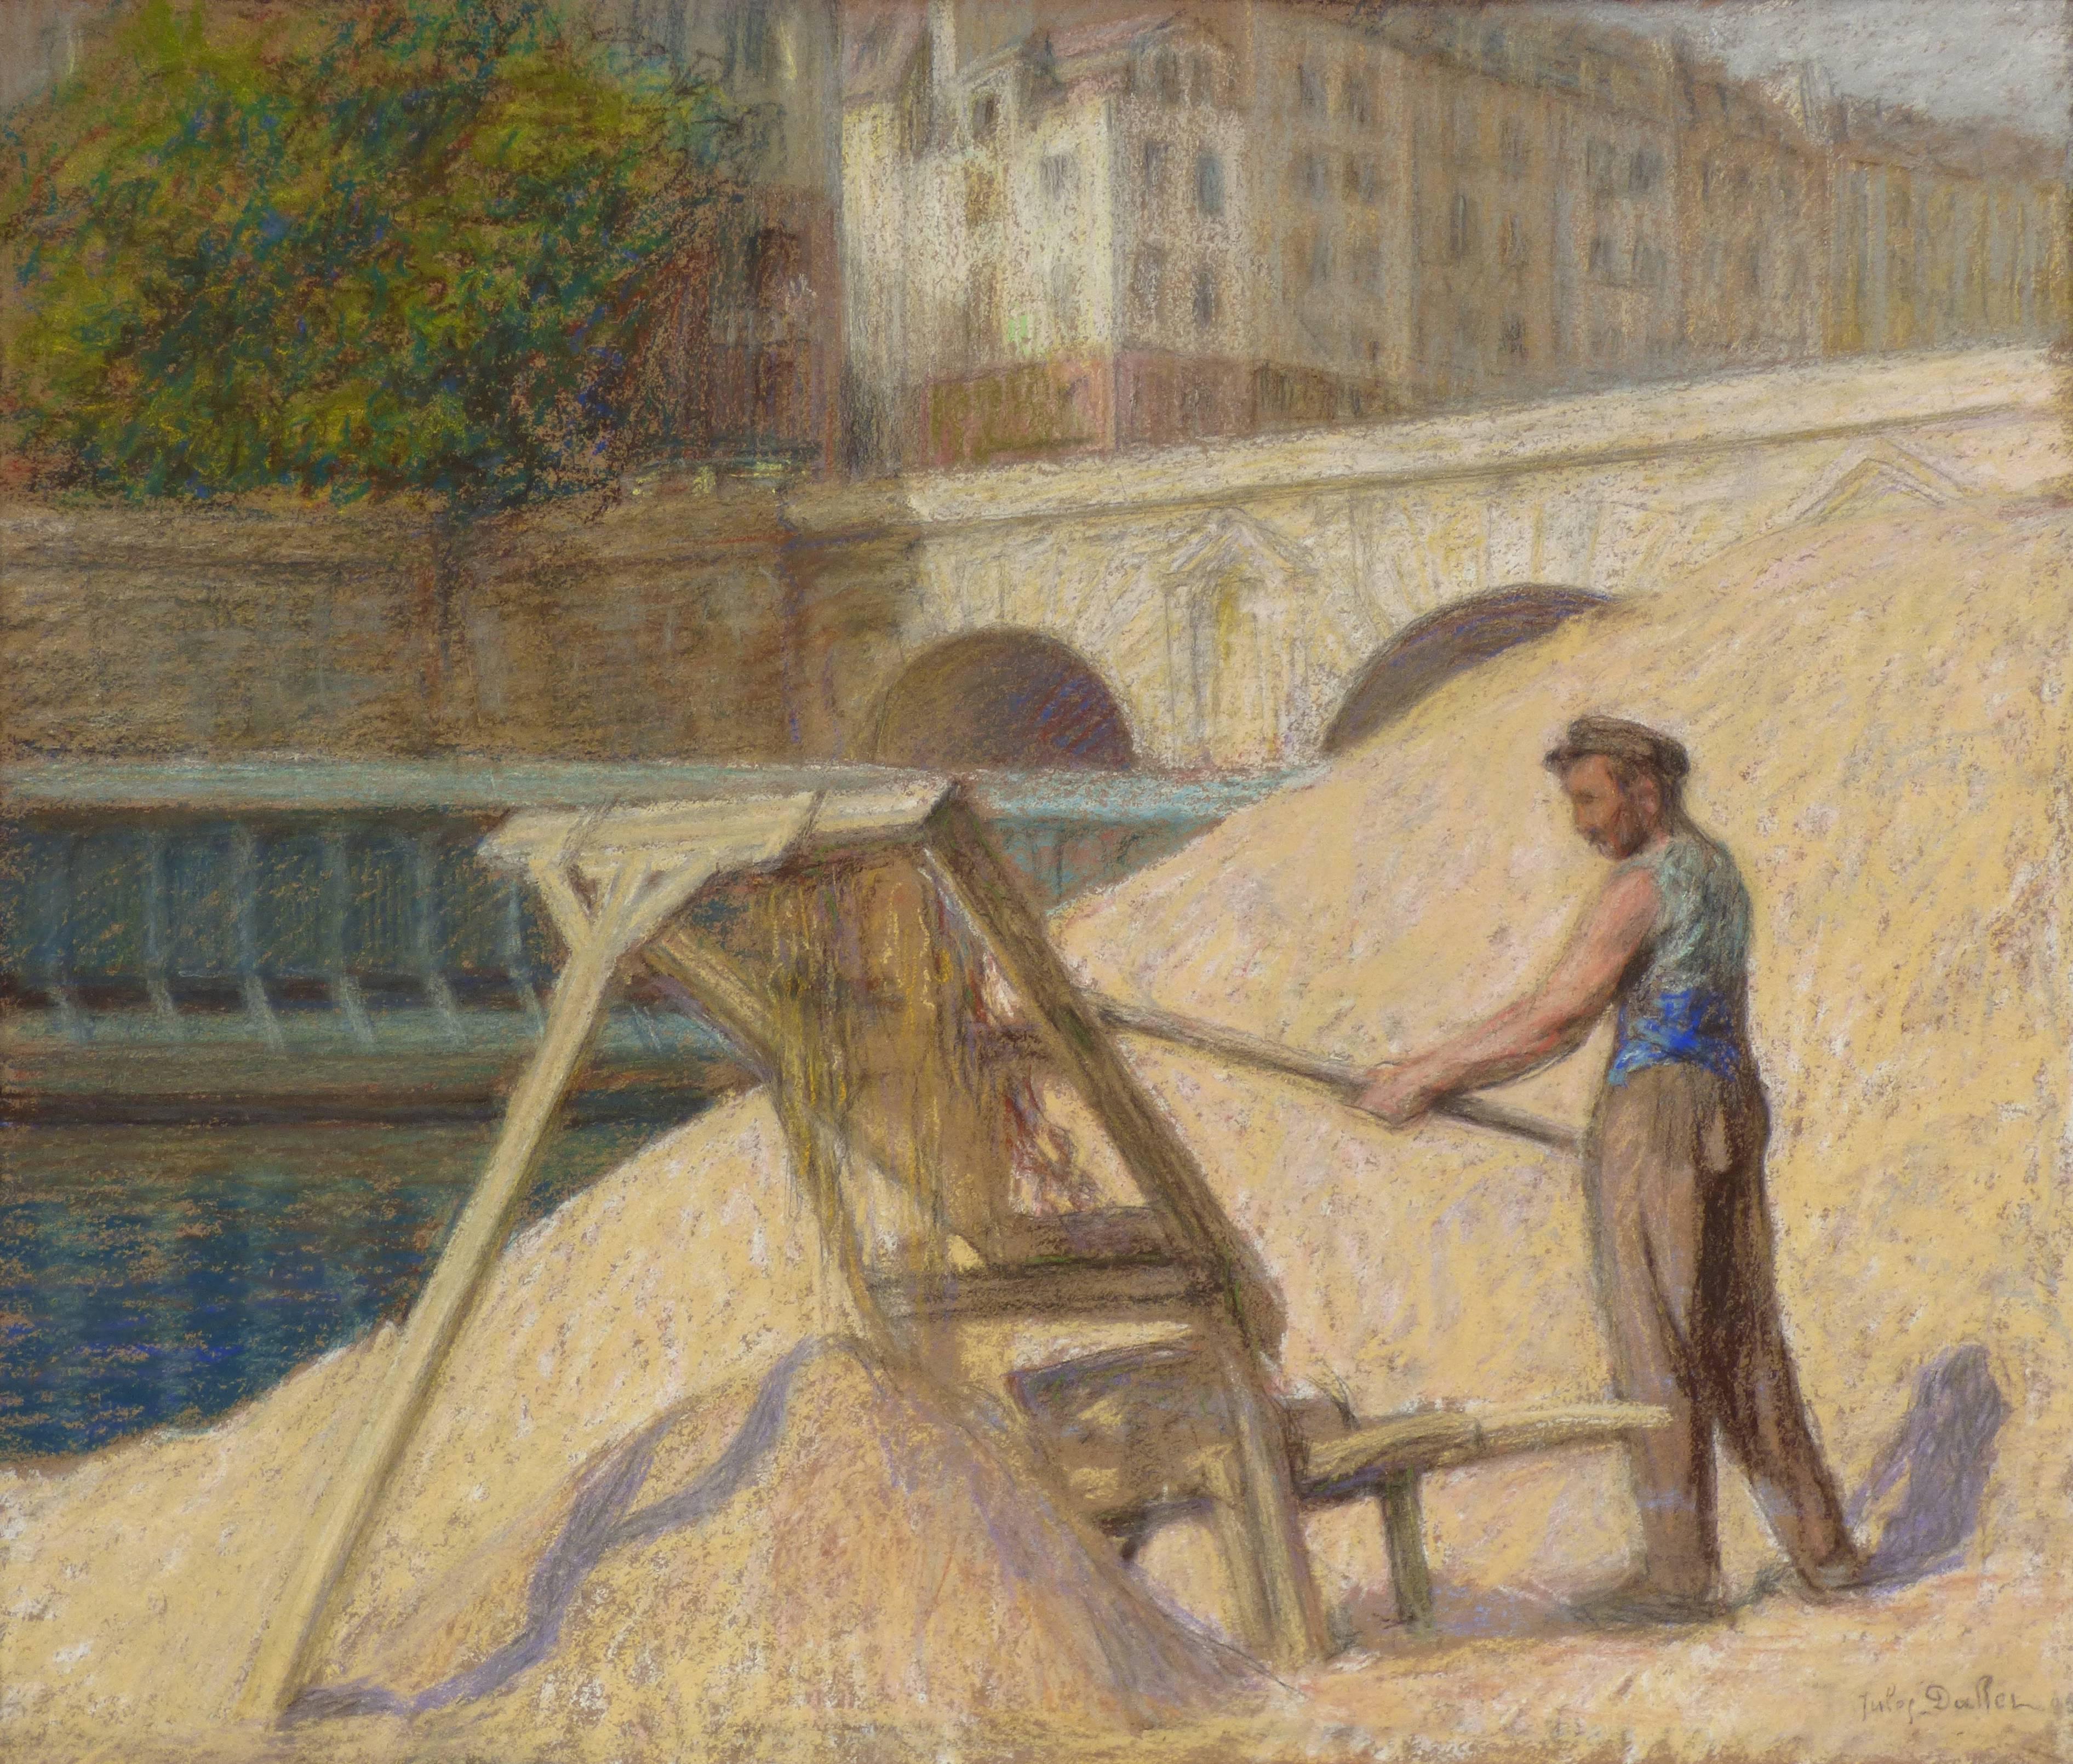 Jules Dallet Landscape Art - A worker near the Seine River in Paris France in 1925